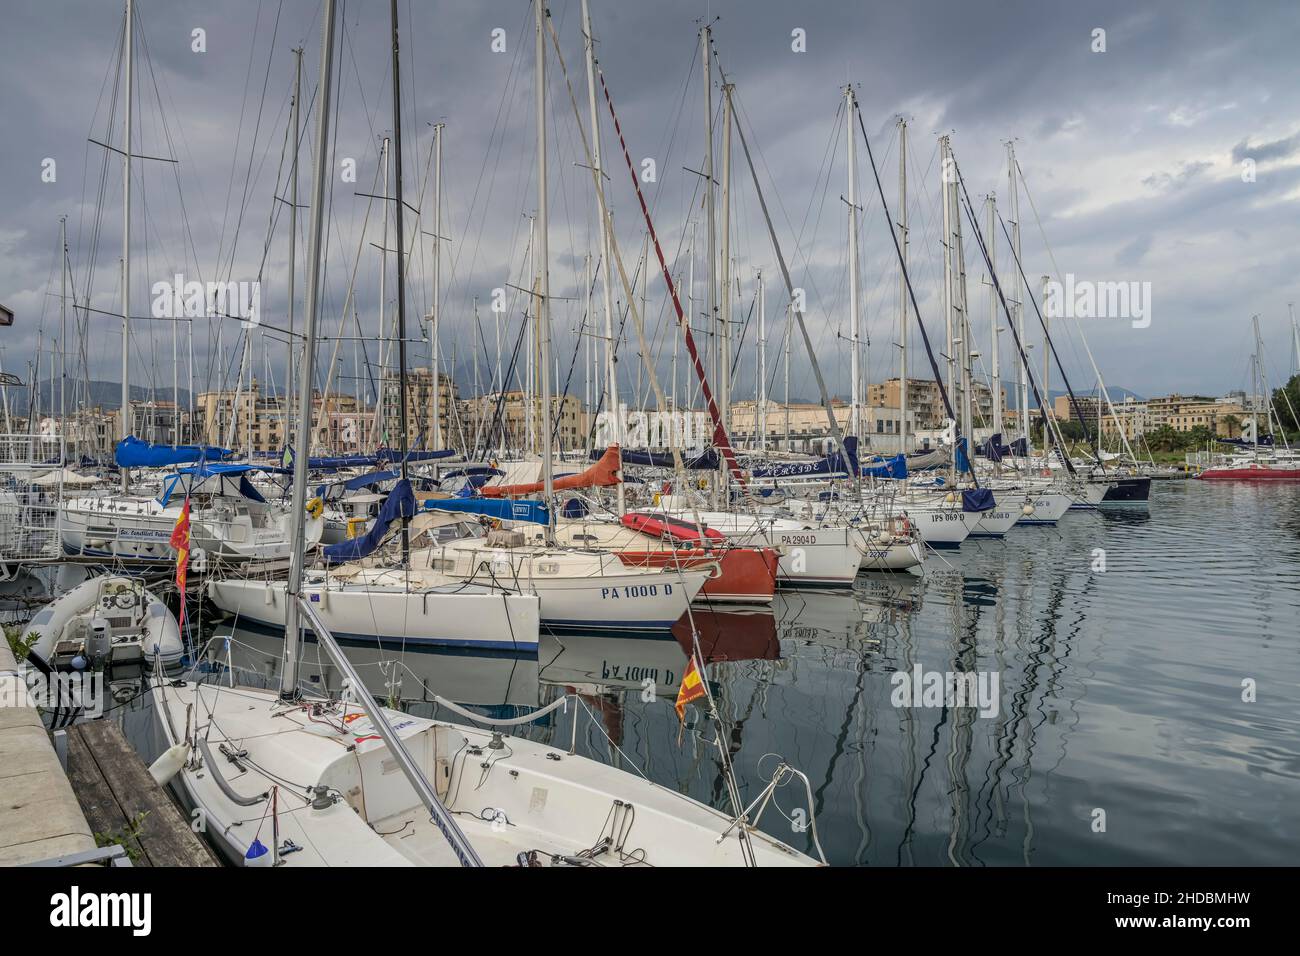 Yachthafen und Marina La Cala, Palermo, Sizilien, Italien Foto de stock